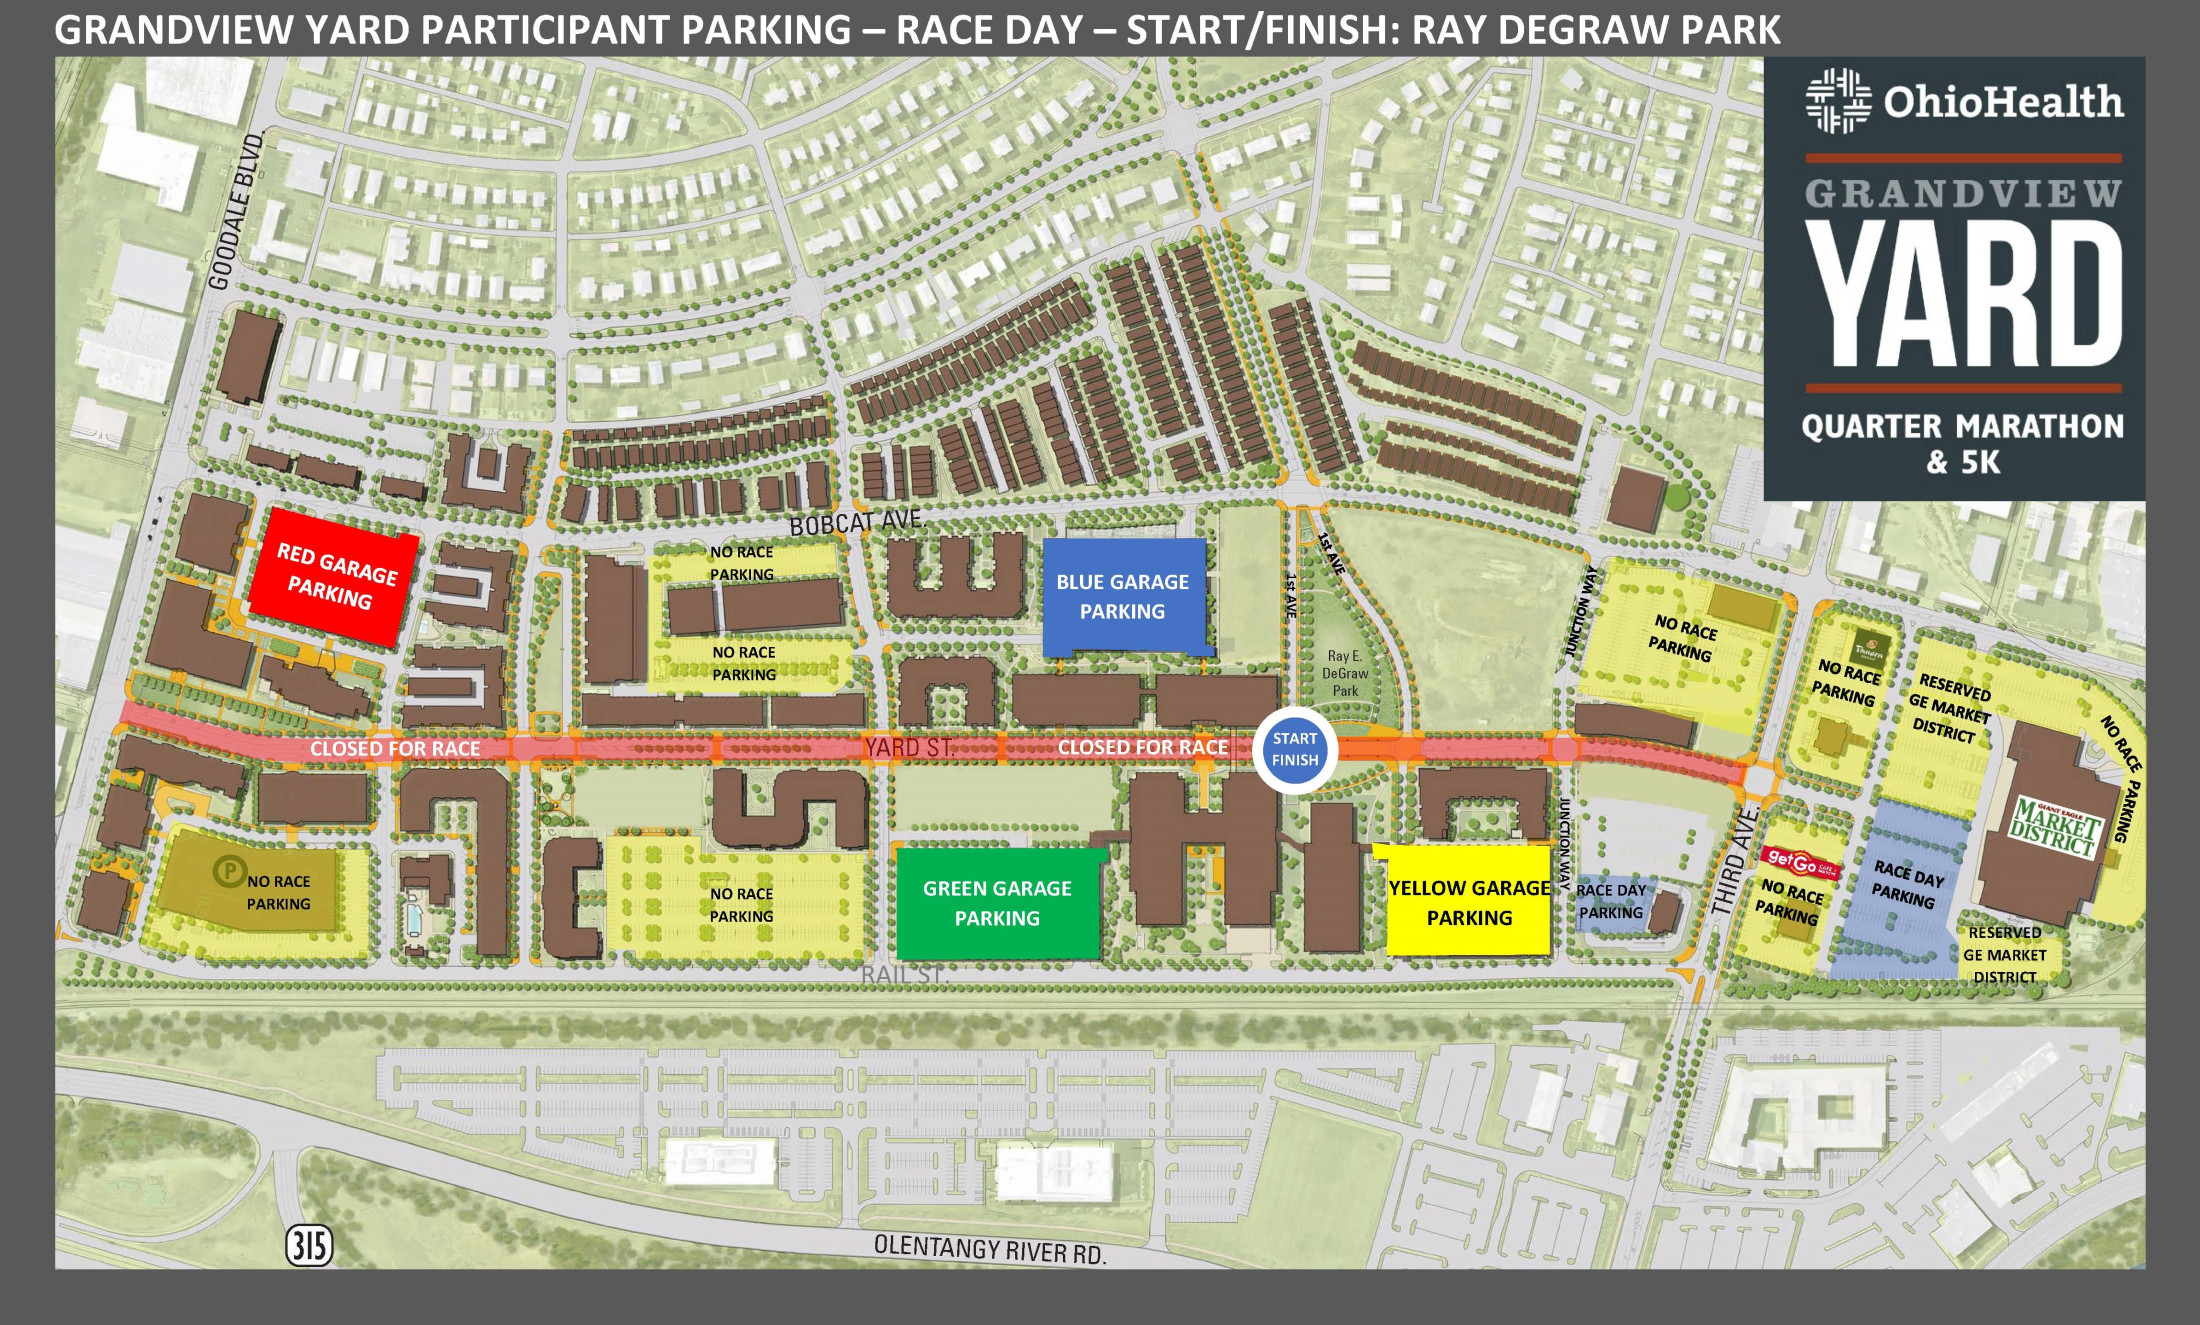 Parking Map » OhioHealth Grandview Yard Quarter Marathon & 5K